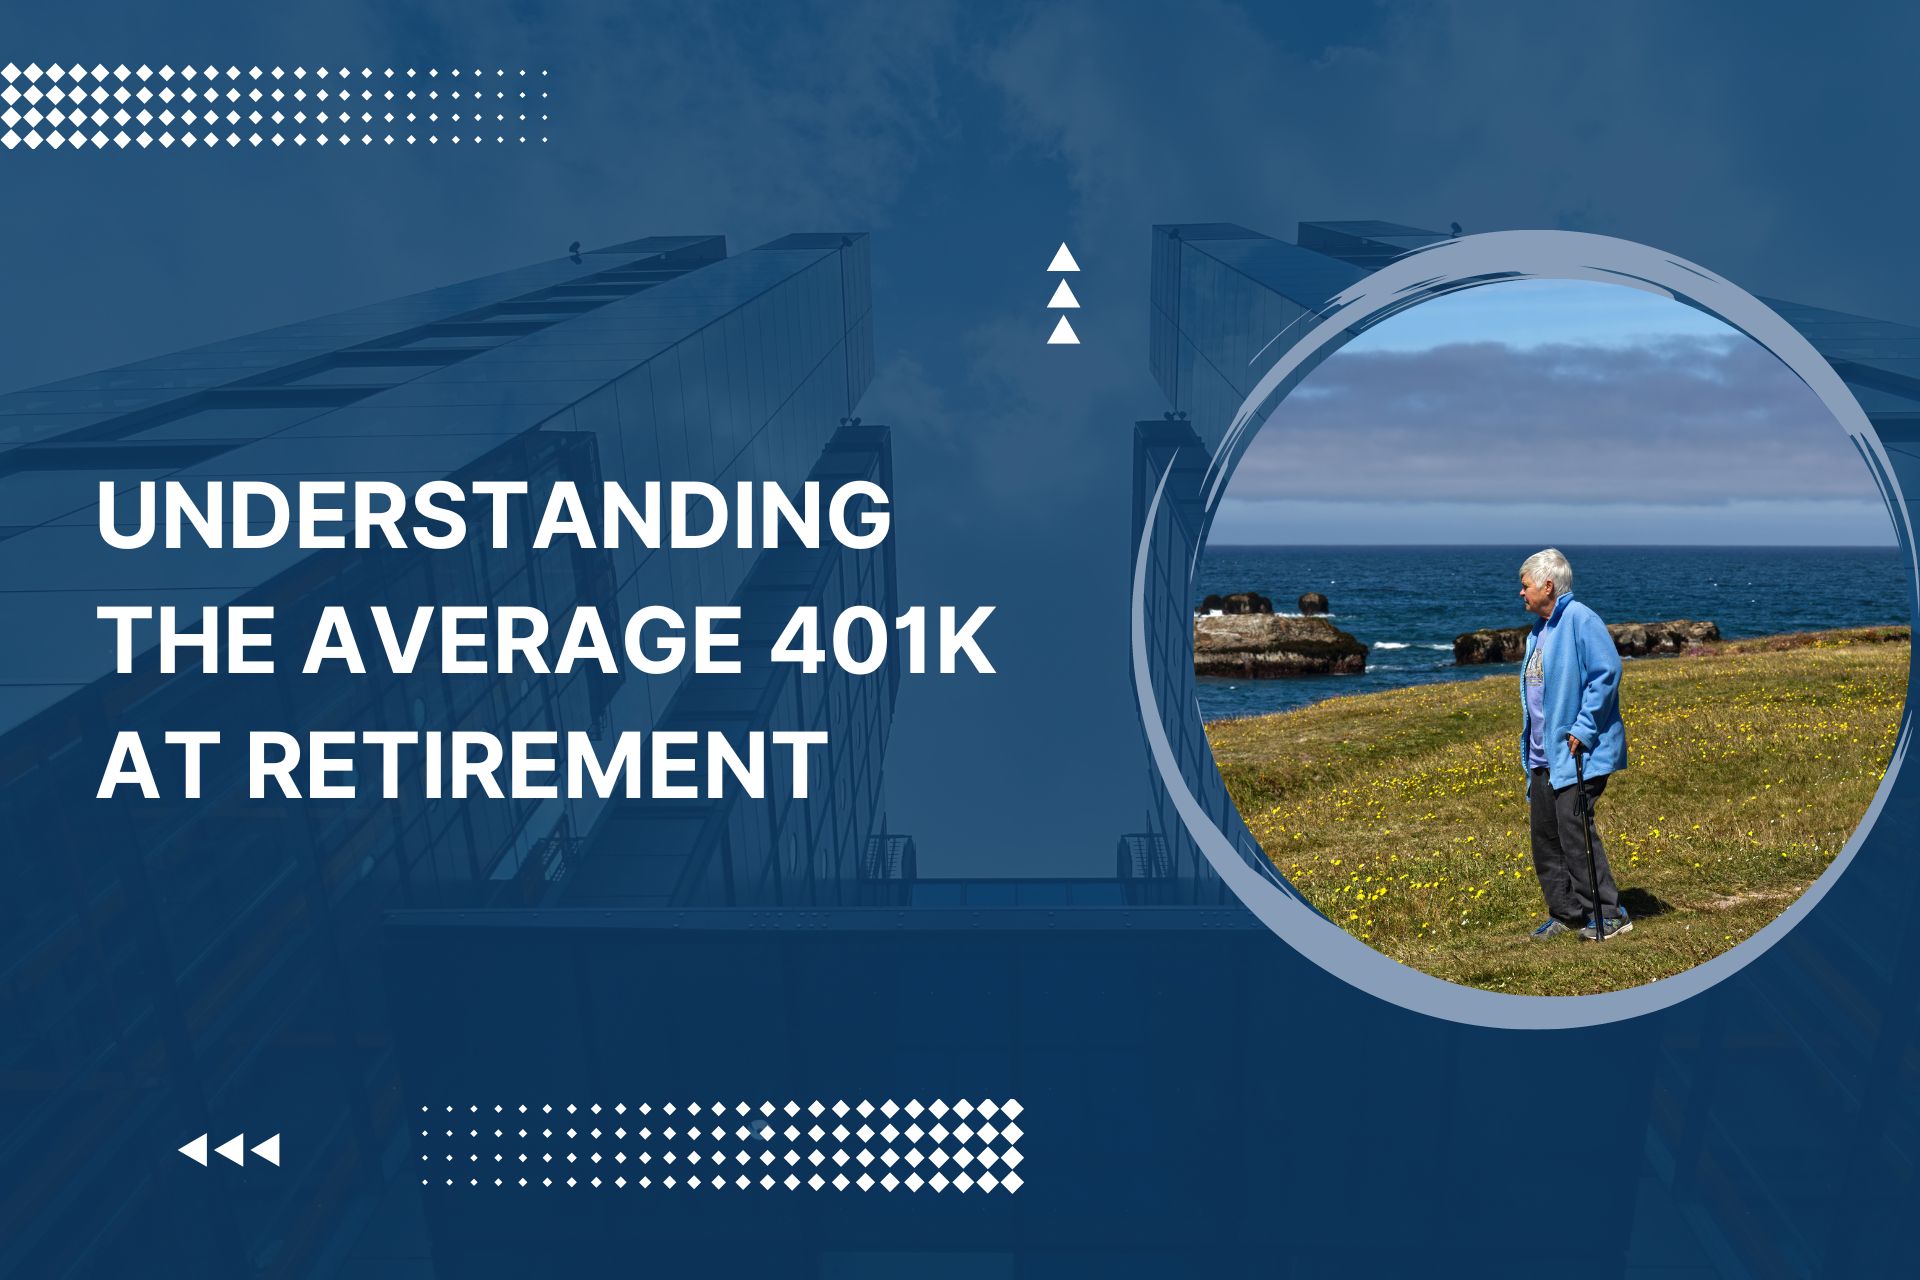 Average 401k at Retirement